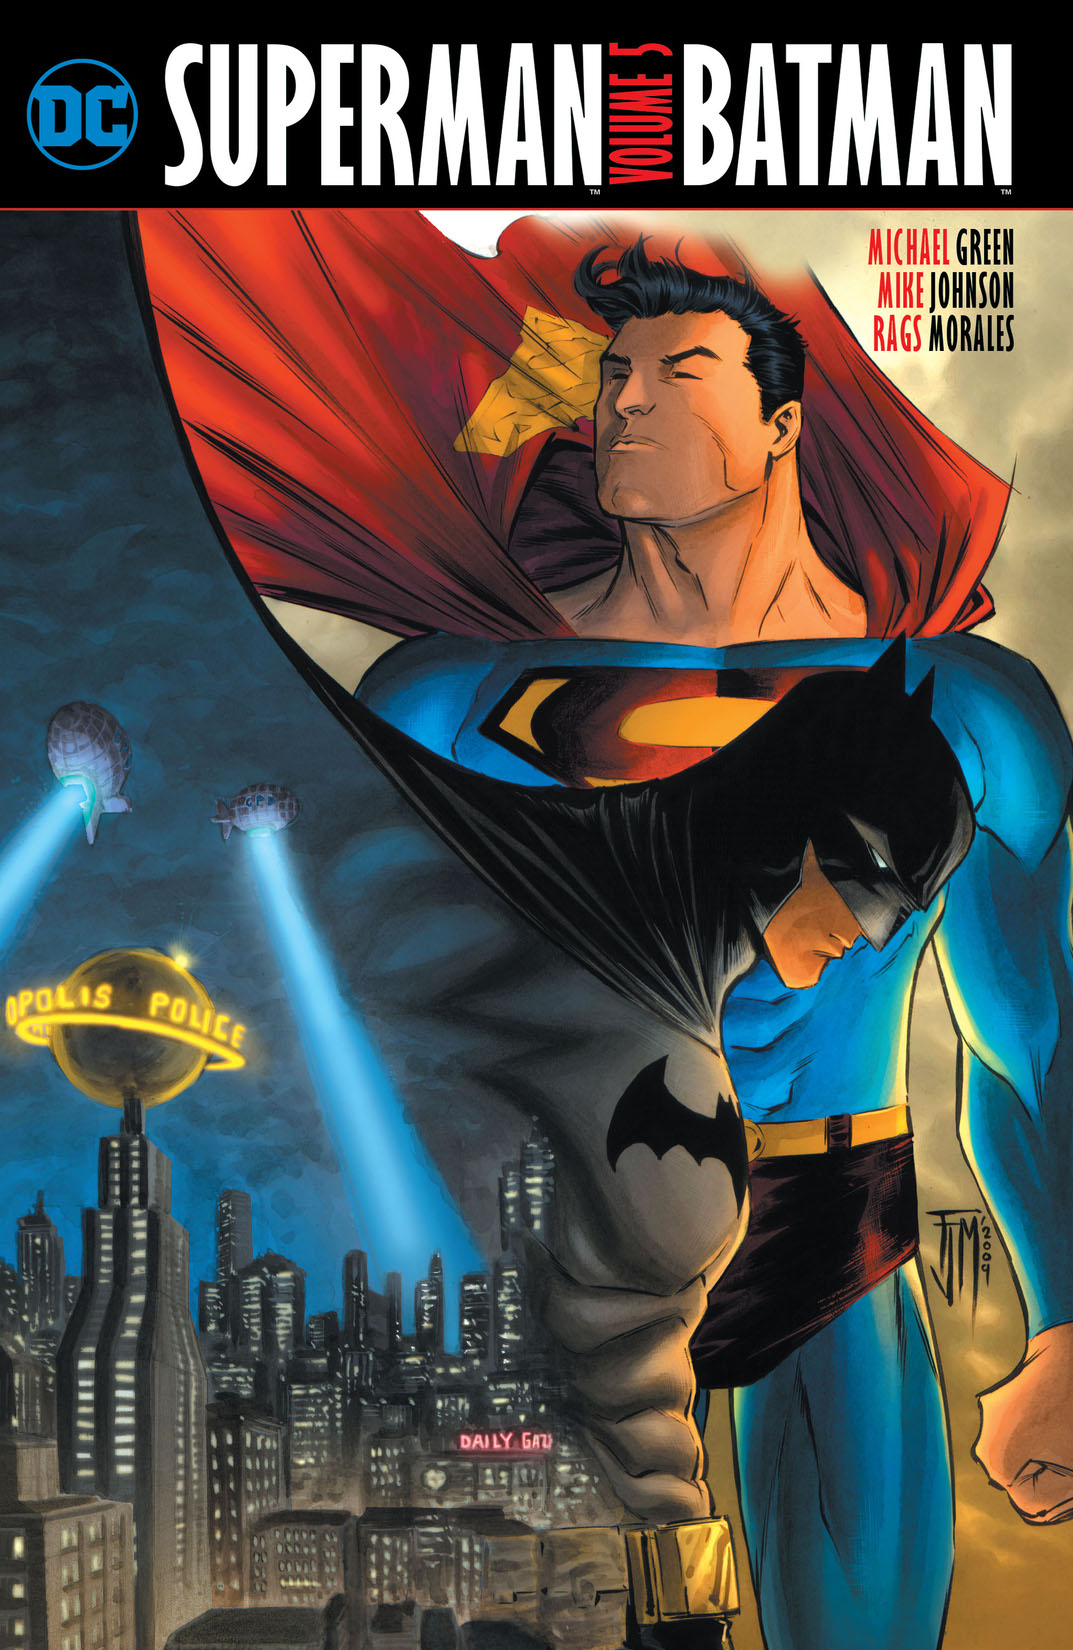 Superman/Batman Vol. 5 preview images